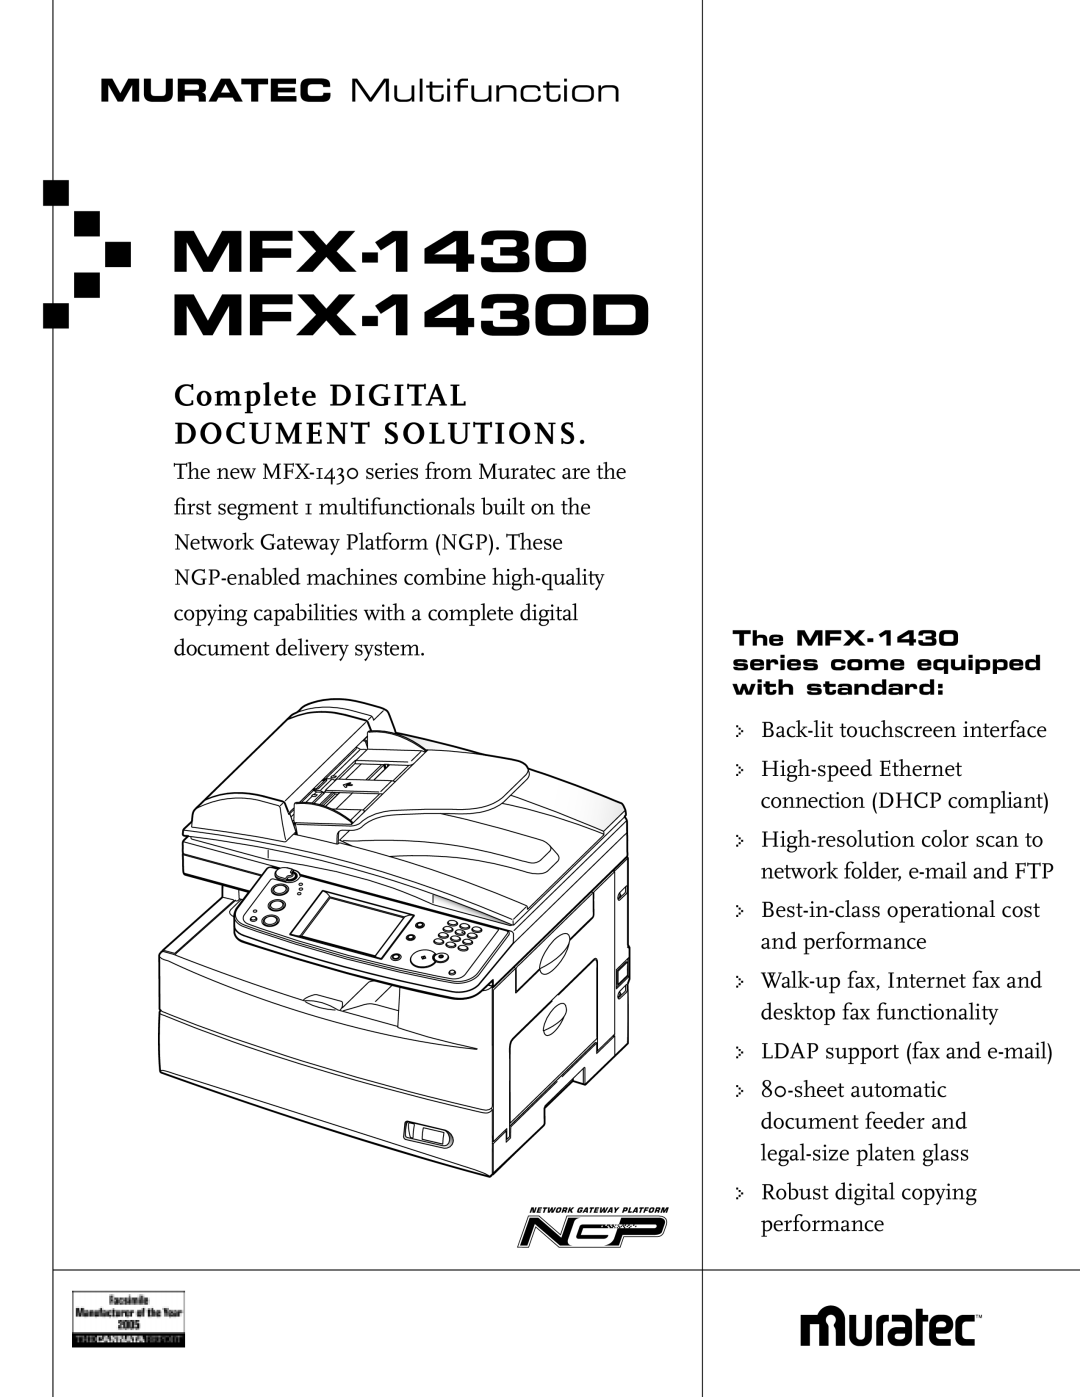 Muratec MFX-1430D manual MURATEC Multifunction, MFXMFX--14301430D, Complete DIGITAL DOCUMENT SOLUTIONS 